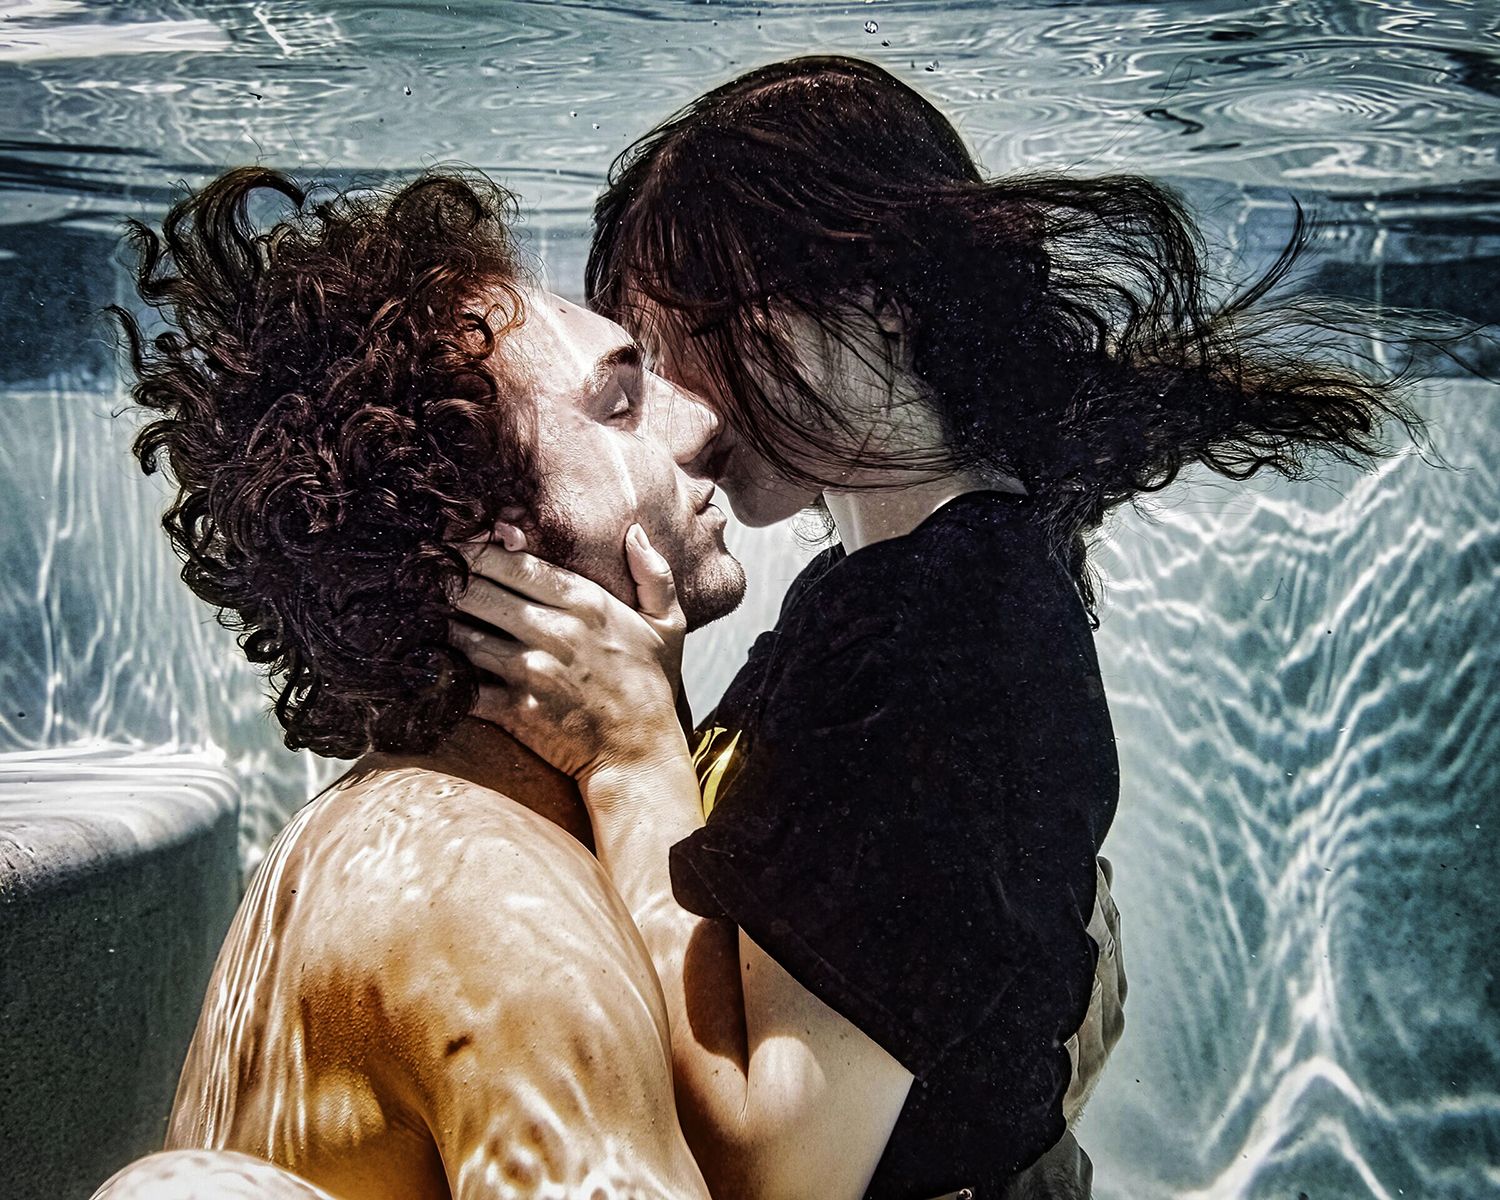 #Under Water Photography, Raymond Asiala